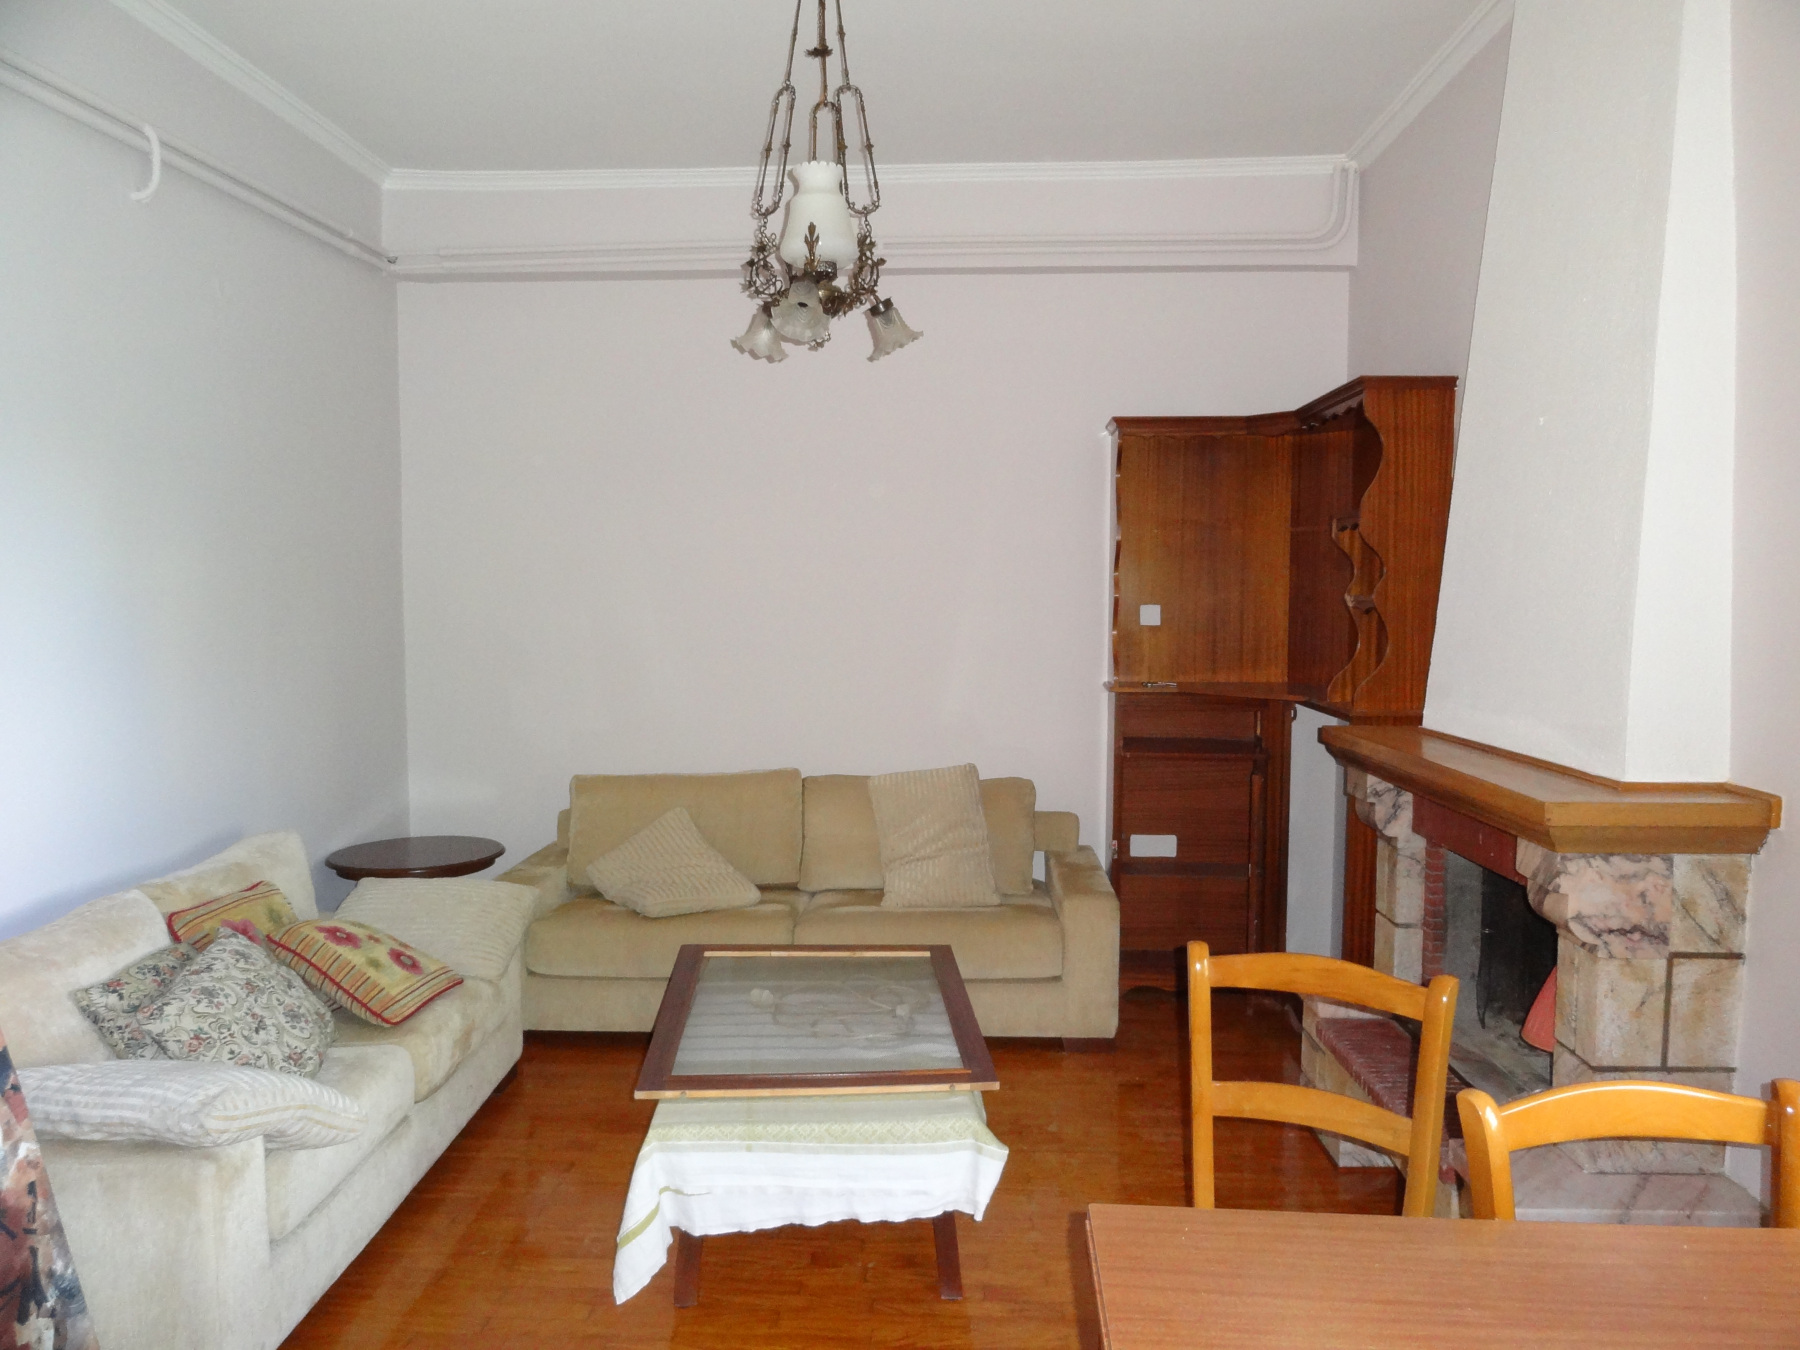 Ground floor 2 bedrooms apartment for rent, 130 sq.m. in Lakkomata in Ioannina